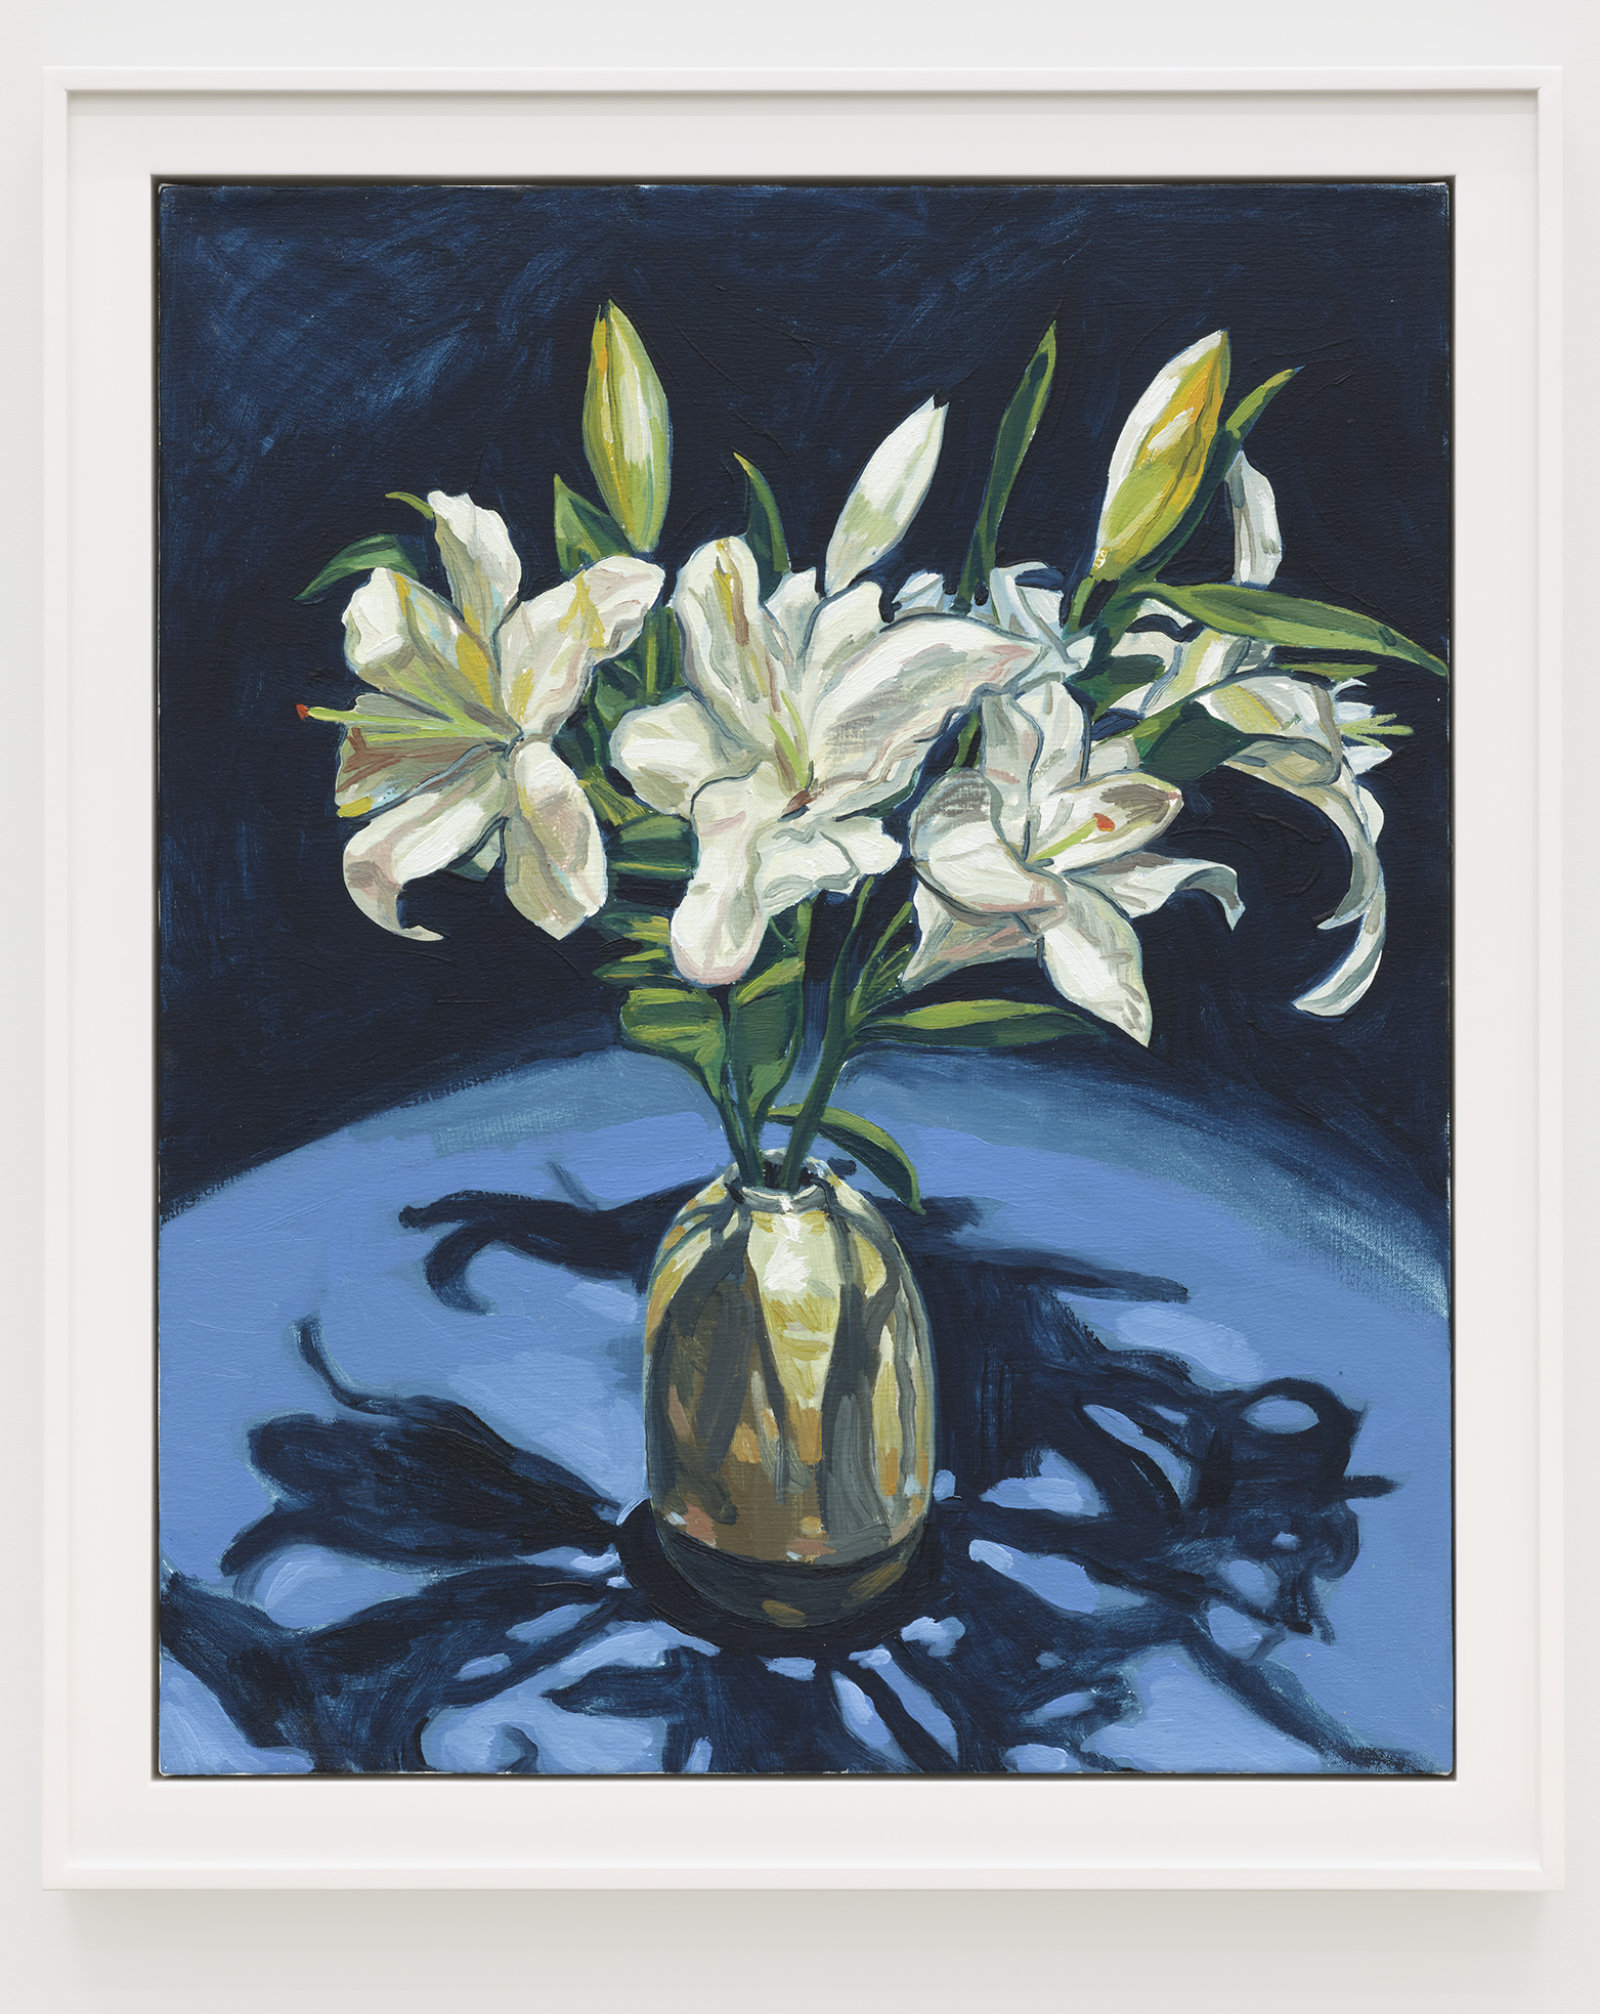 Damian Moppett, Lilies (Indigo), 2020, oil on canvas, 32 x 27 in. (82 x 69 cm)